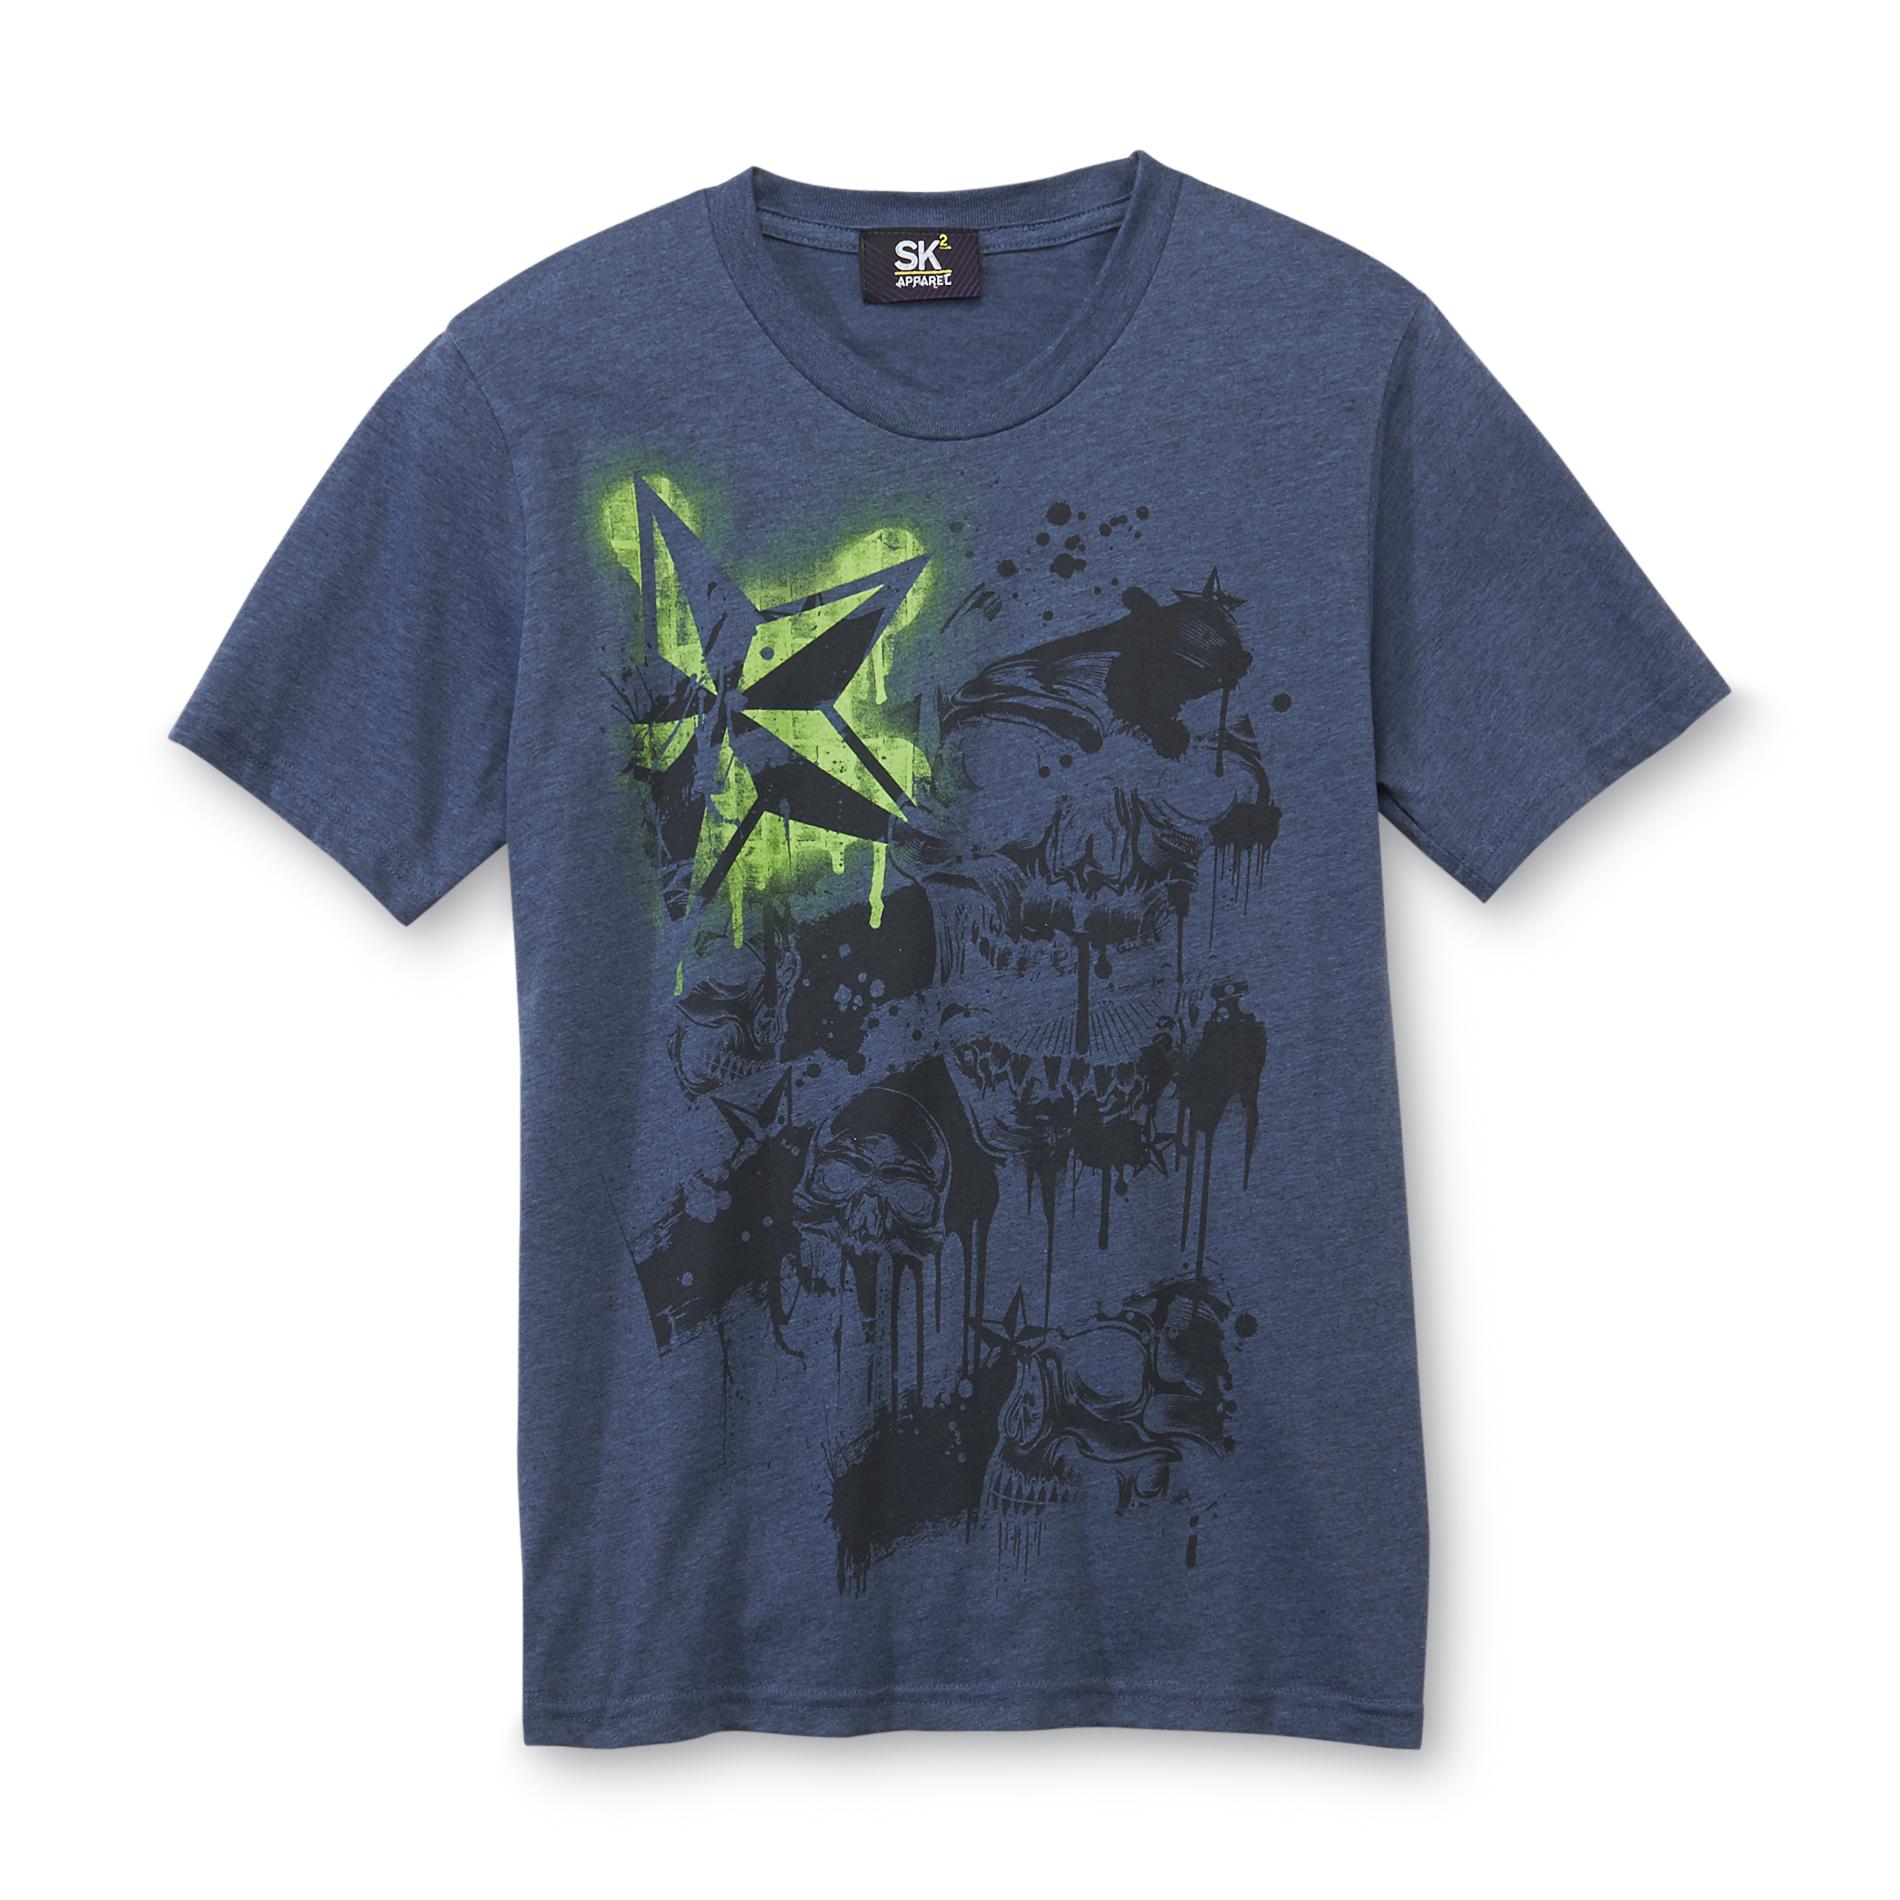 SK2 Boy's Graphic T-Shirt - Nautical Star & Skulls